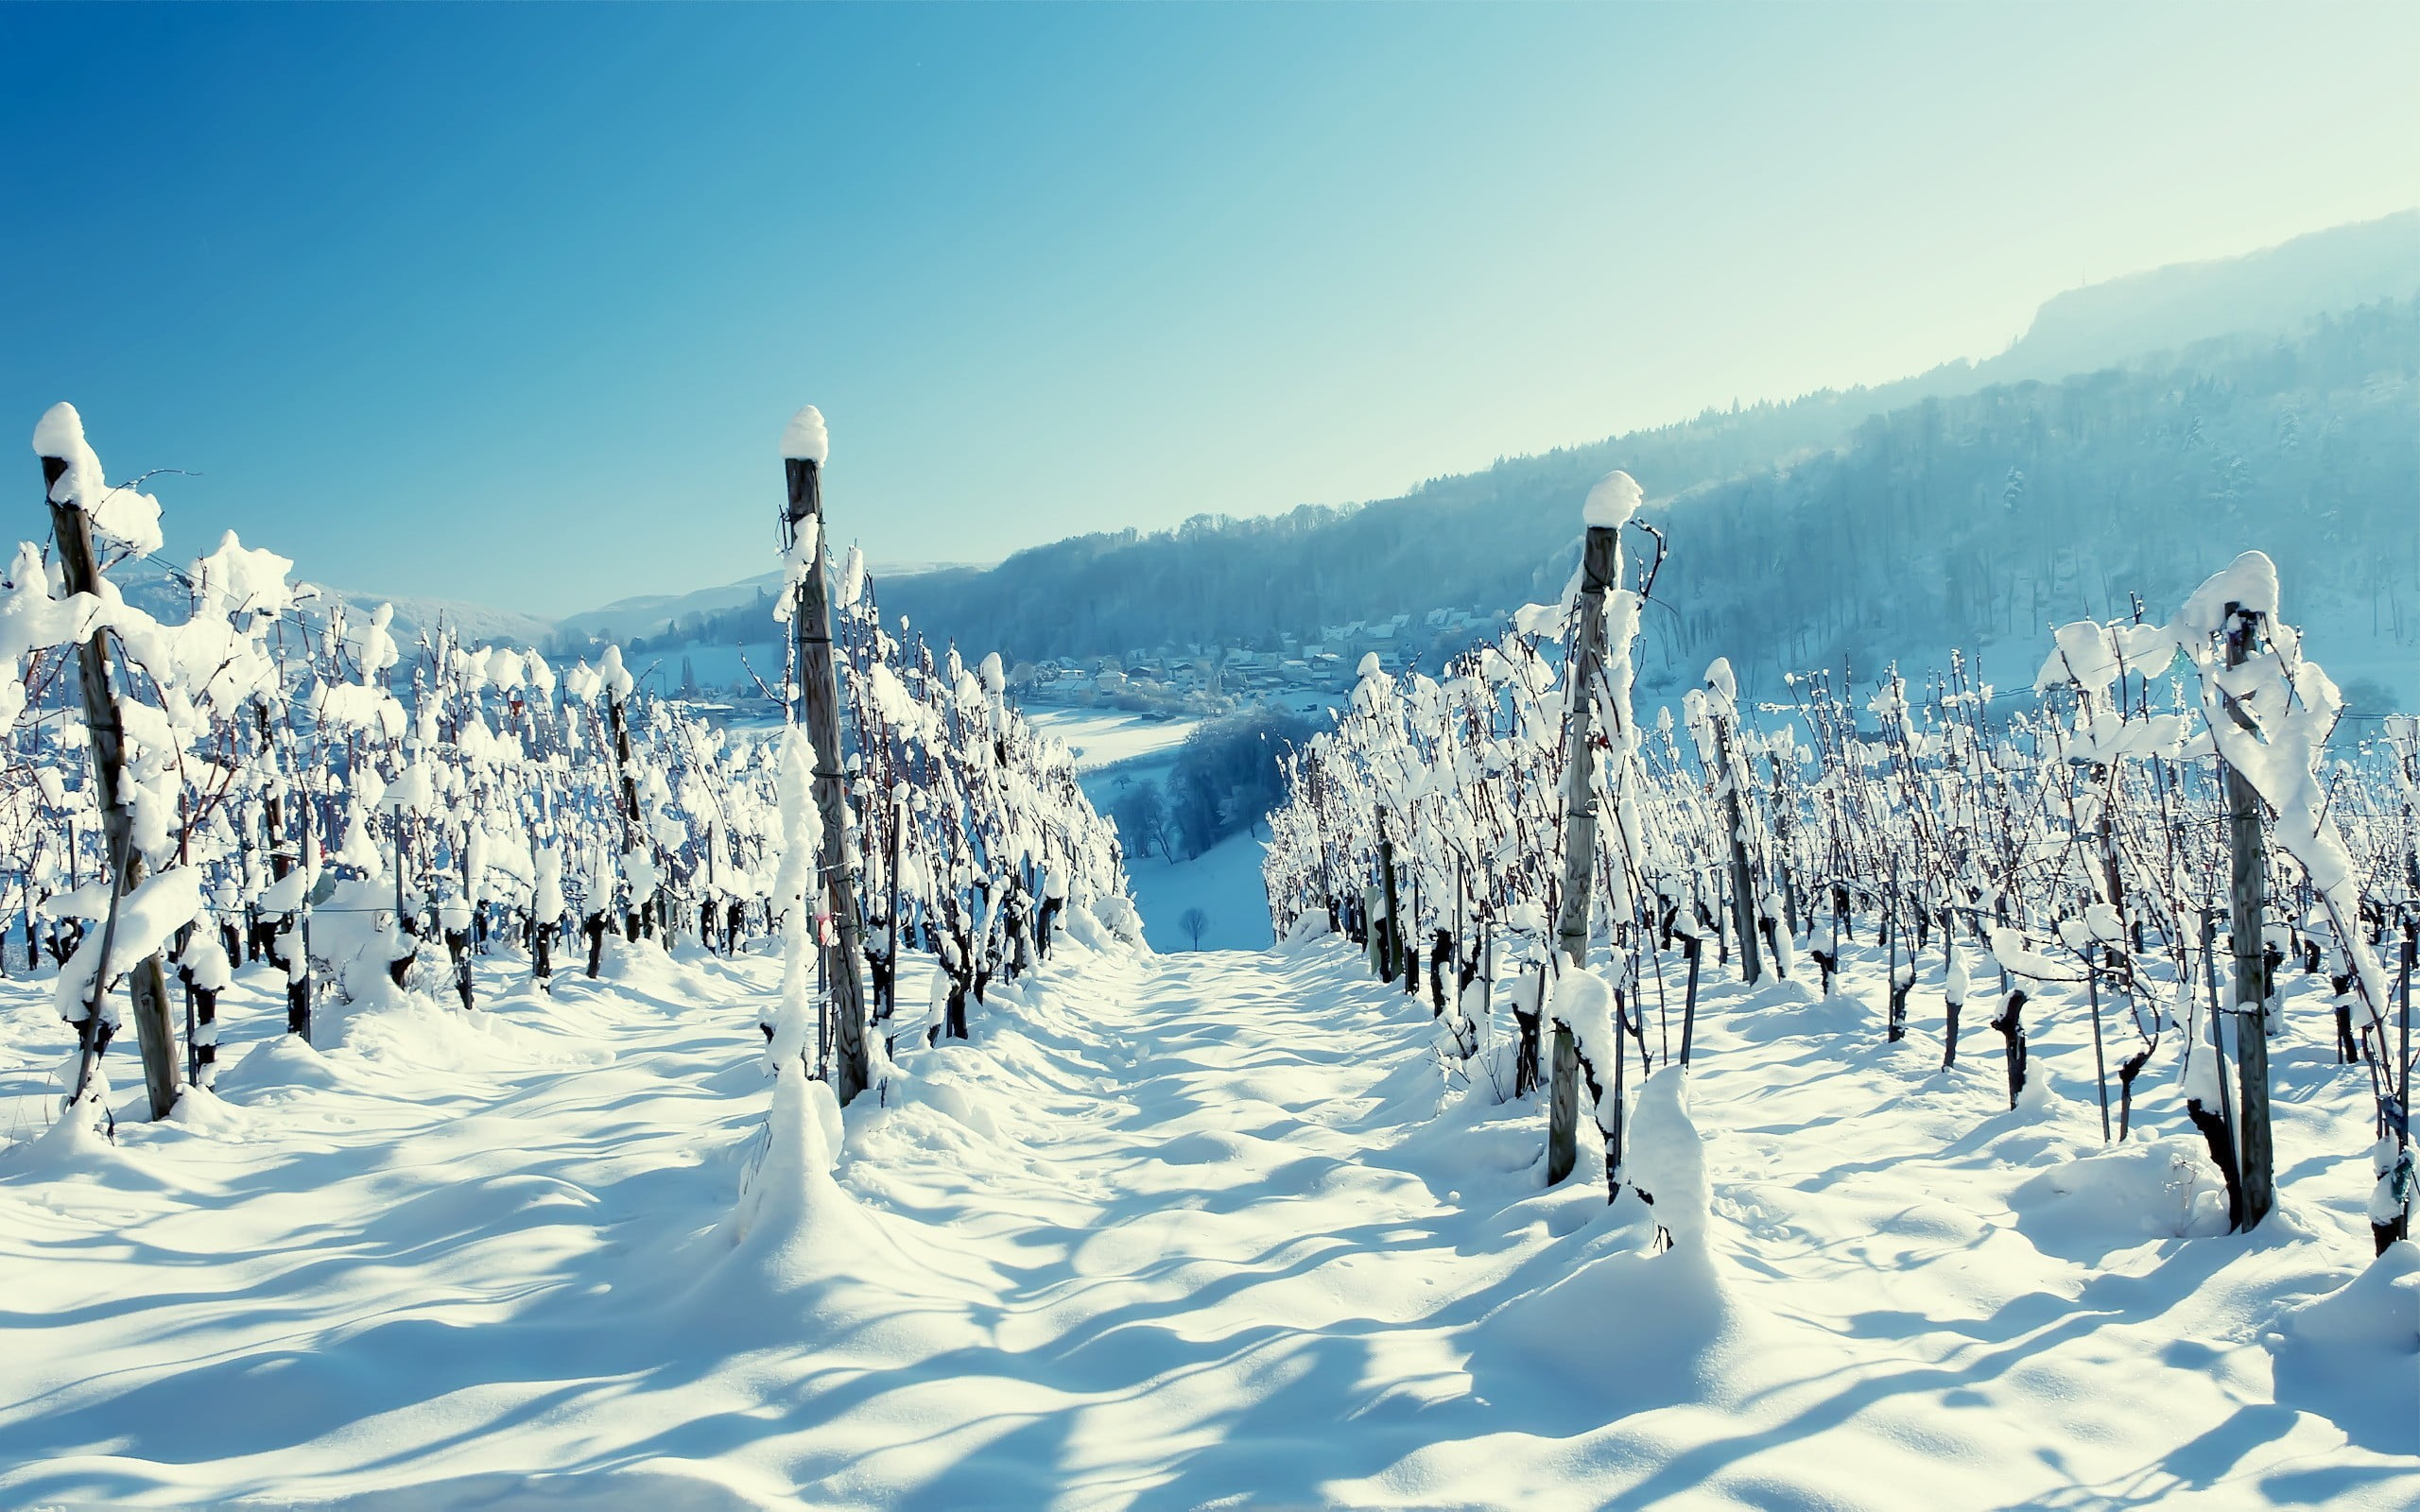 snow field, landscape, winter, cold temperature, nature, sky